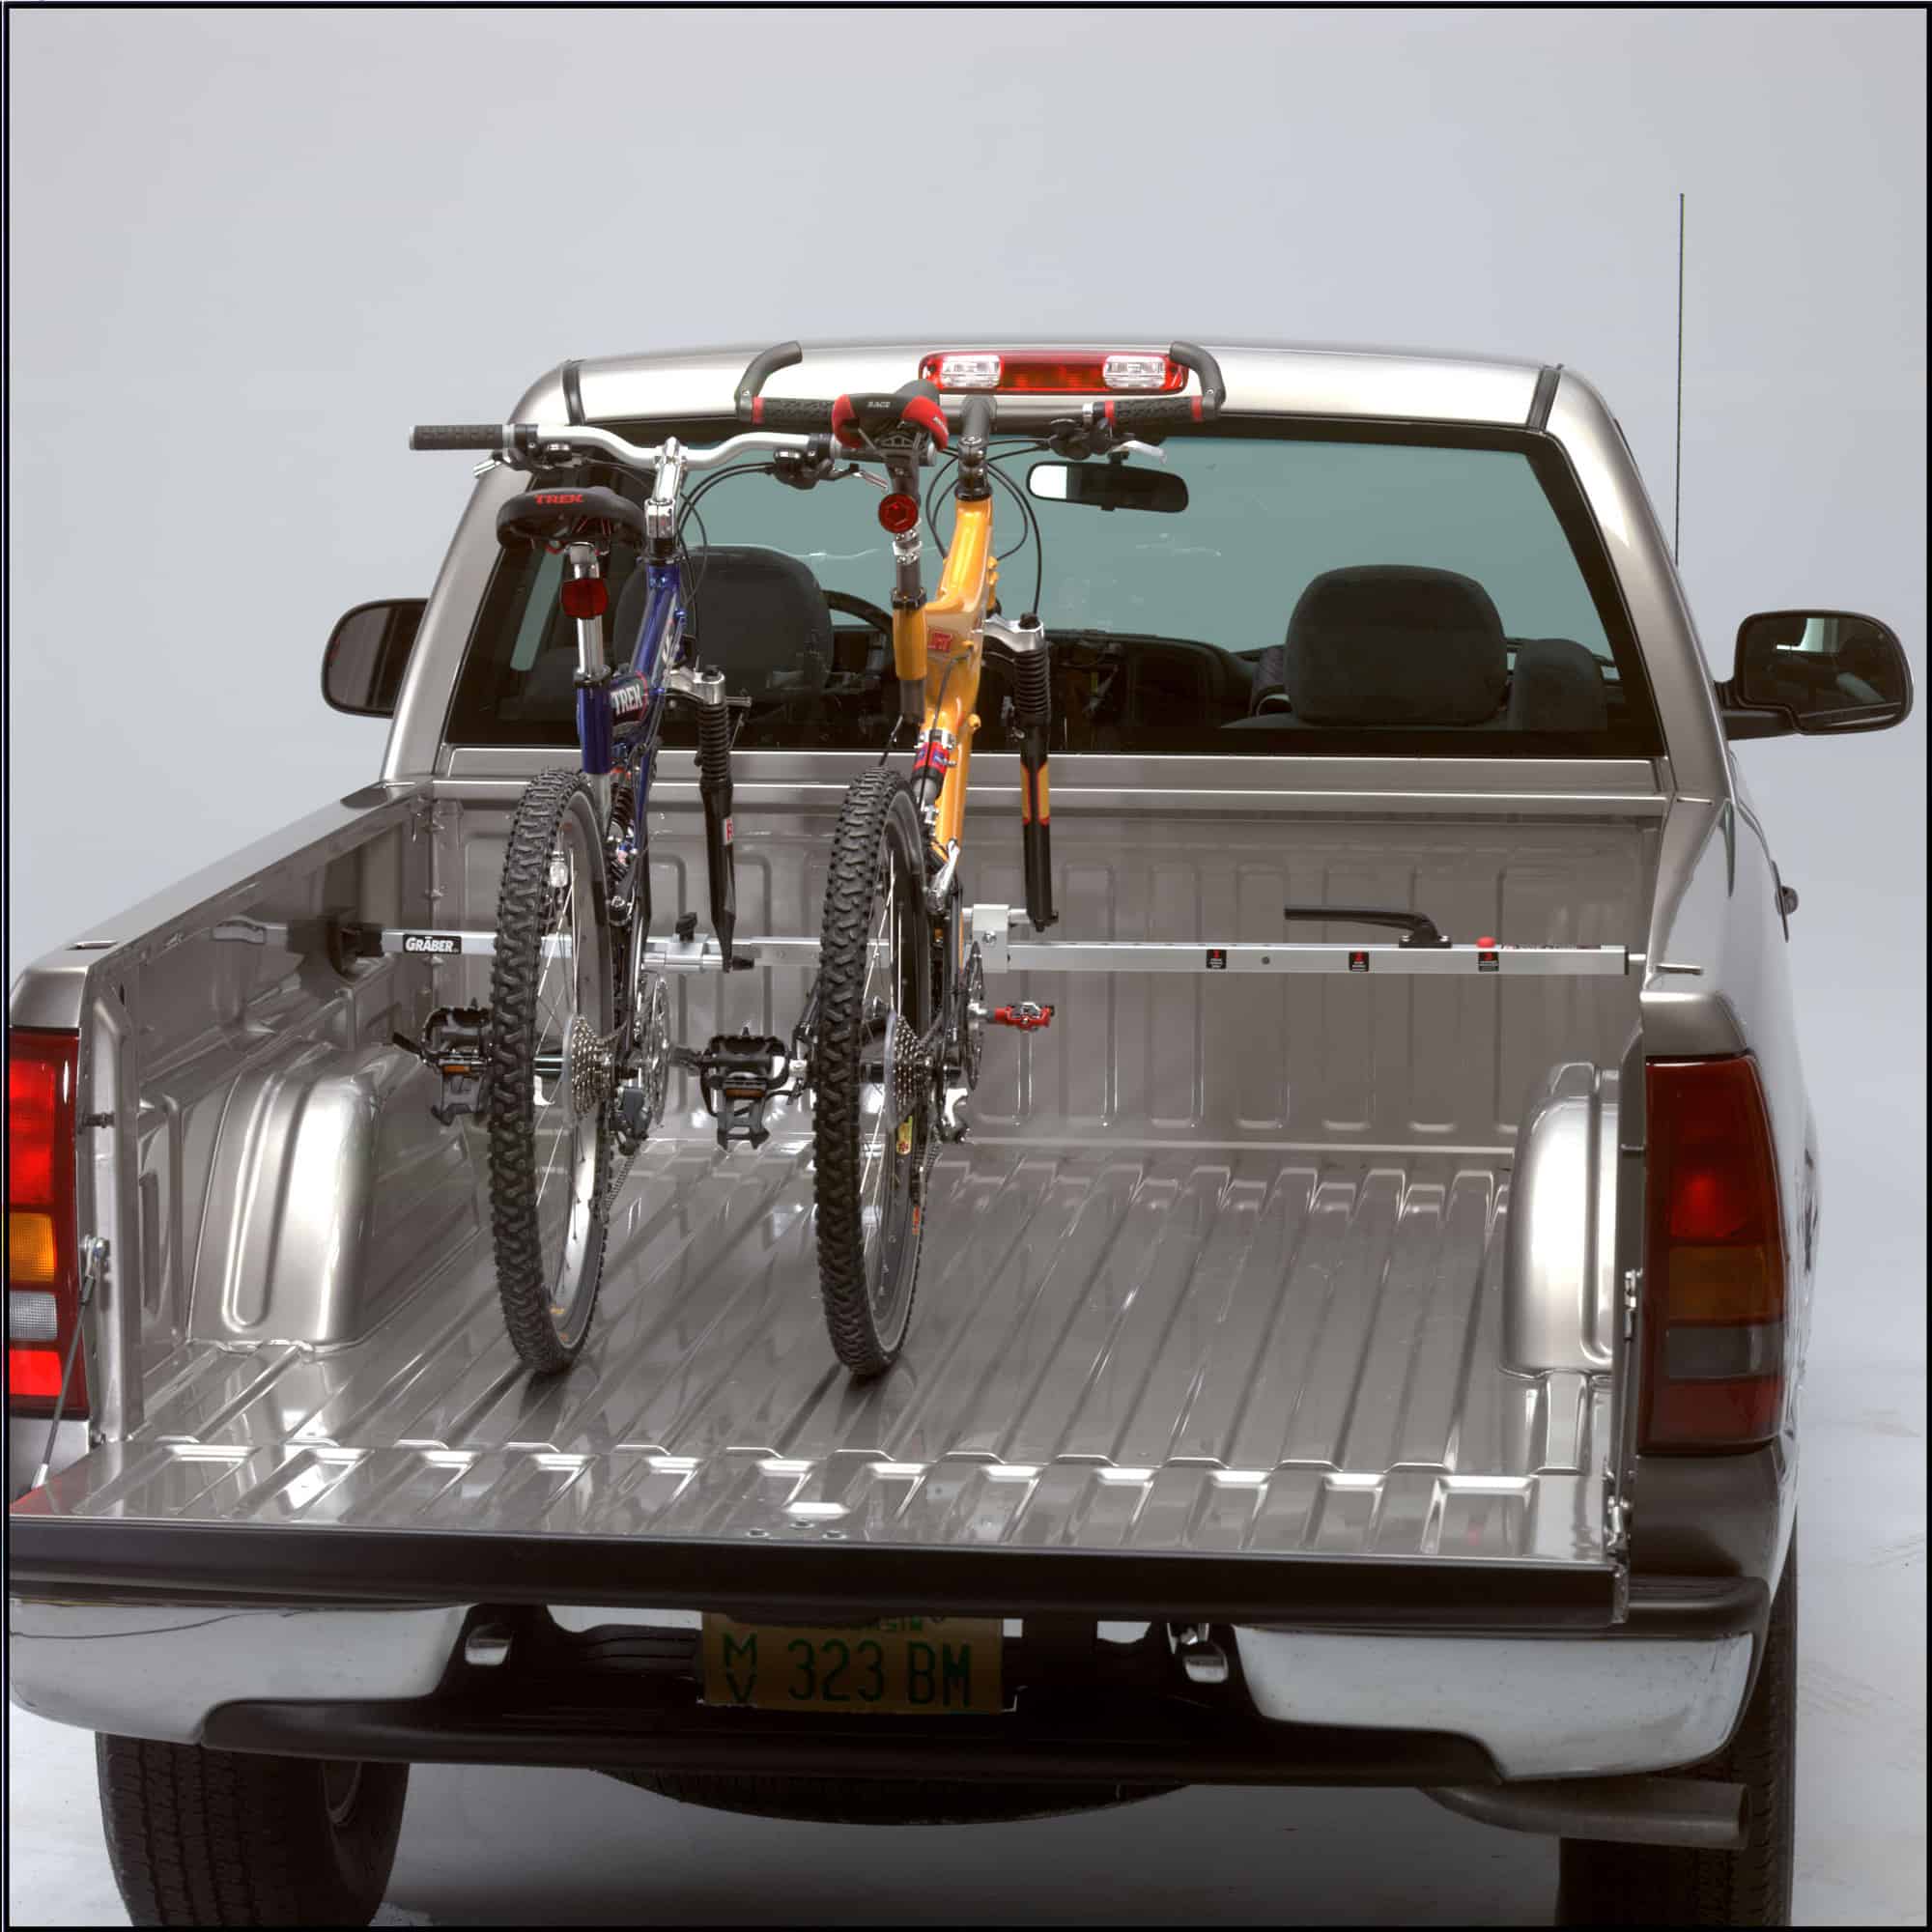 Best Truck Bed Bike Racks - Kool Rack LoaDeD With Bikes In Truck TRK0055523523452